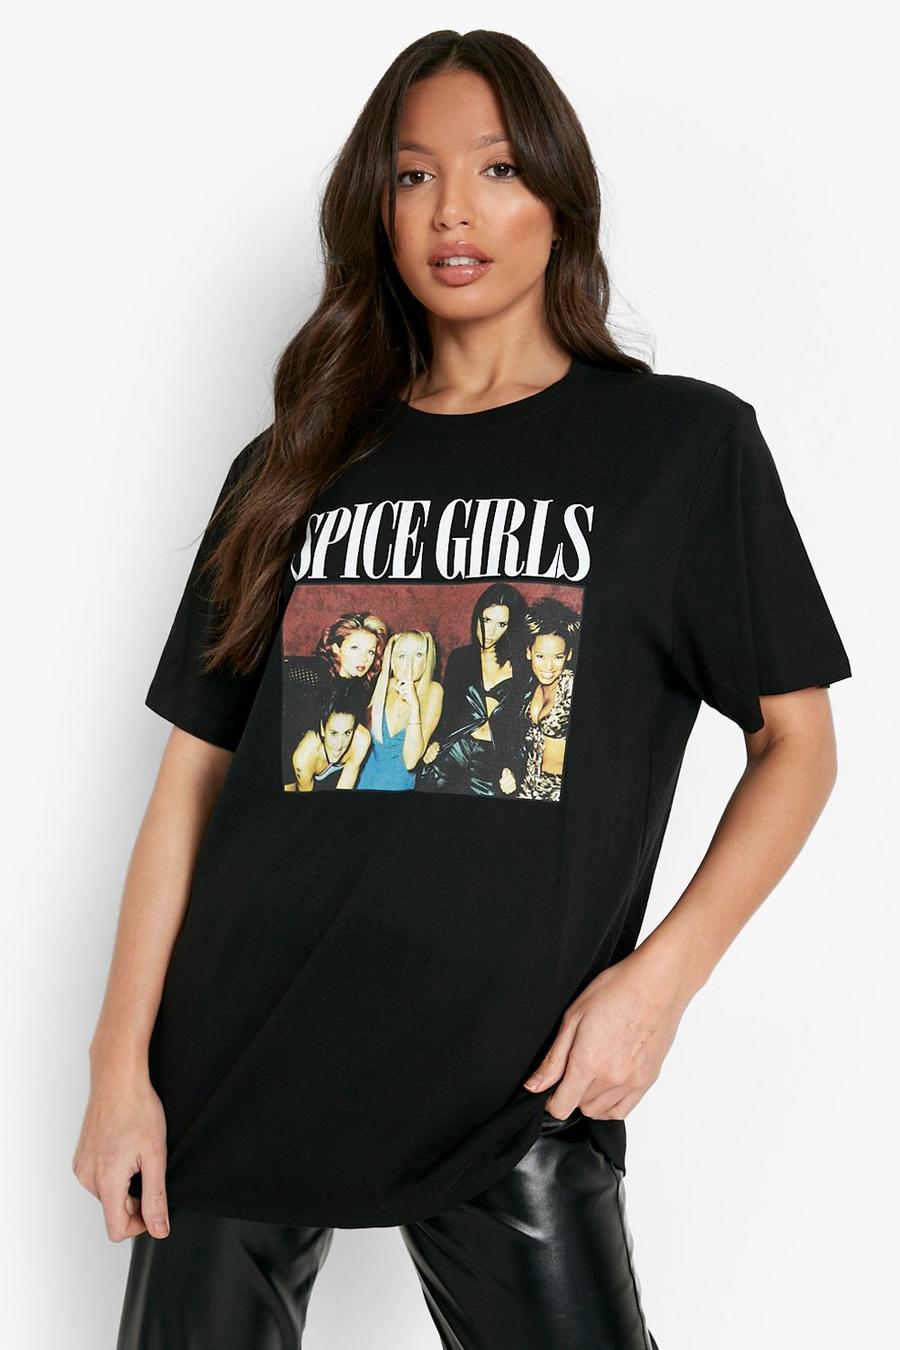 Black Tall - Spice Girls T-shirt